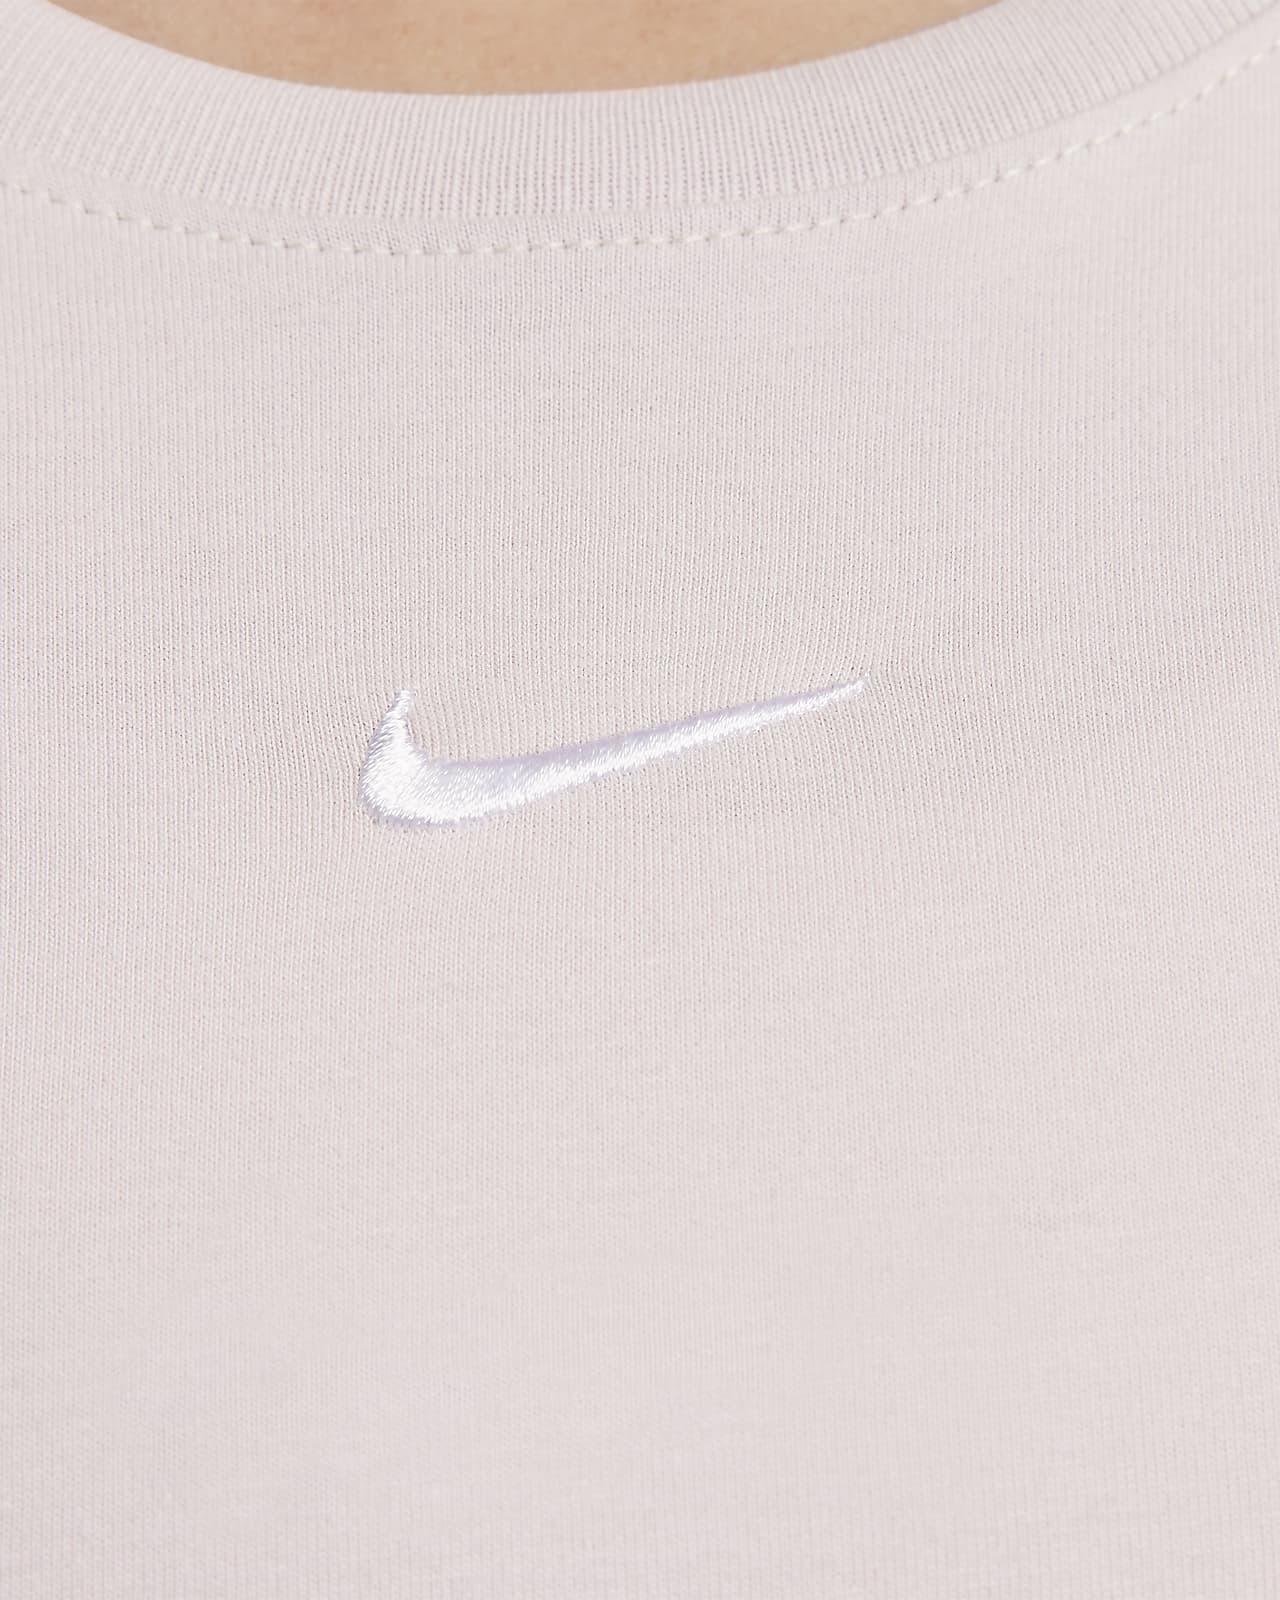 Nike Men's Sportswear Premium Essentials Long-Sleeve T-Shirt